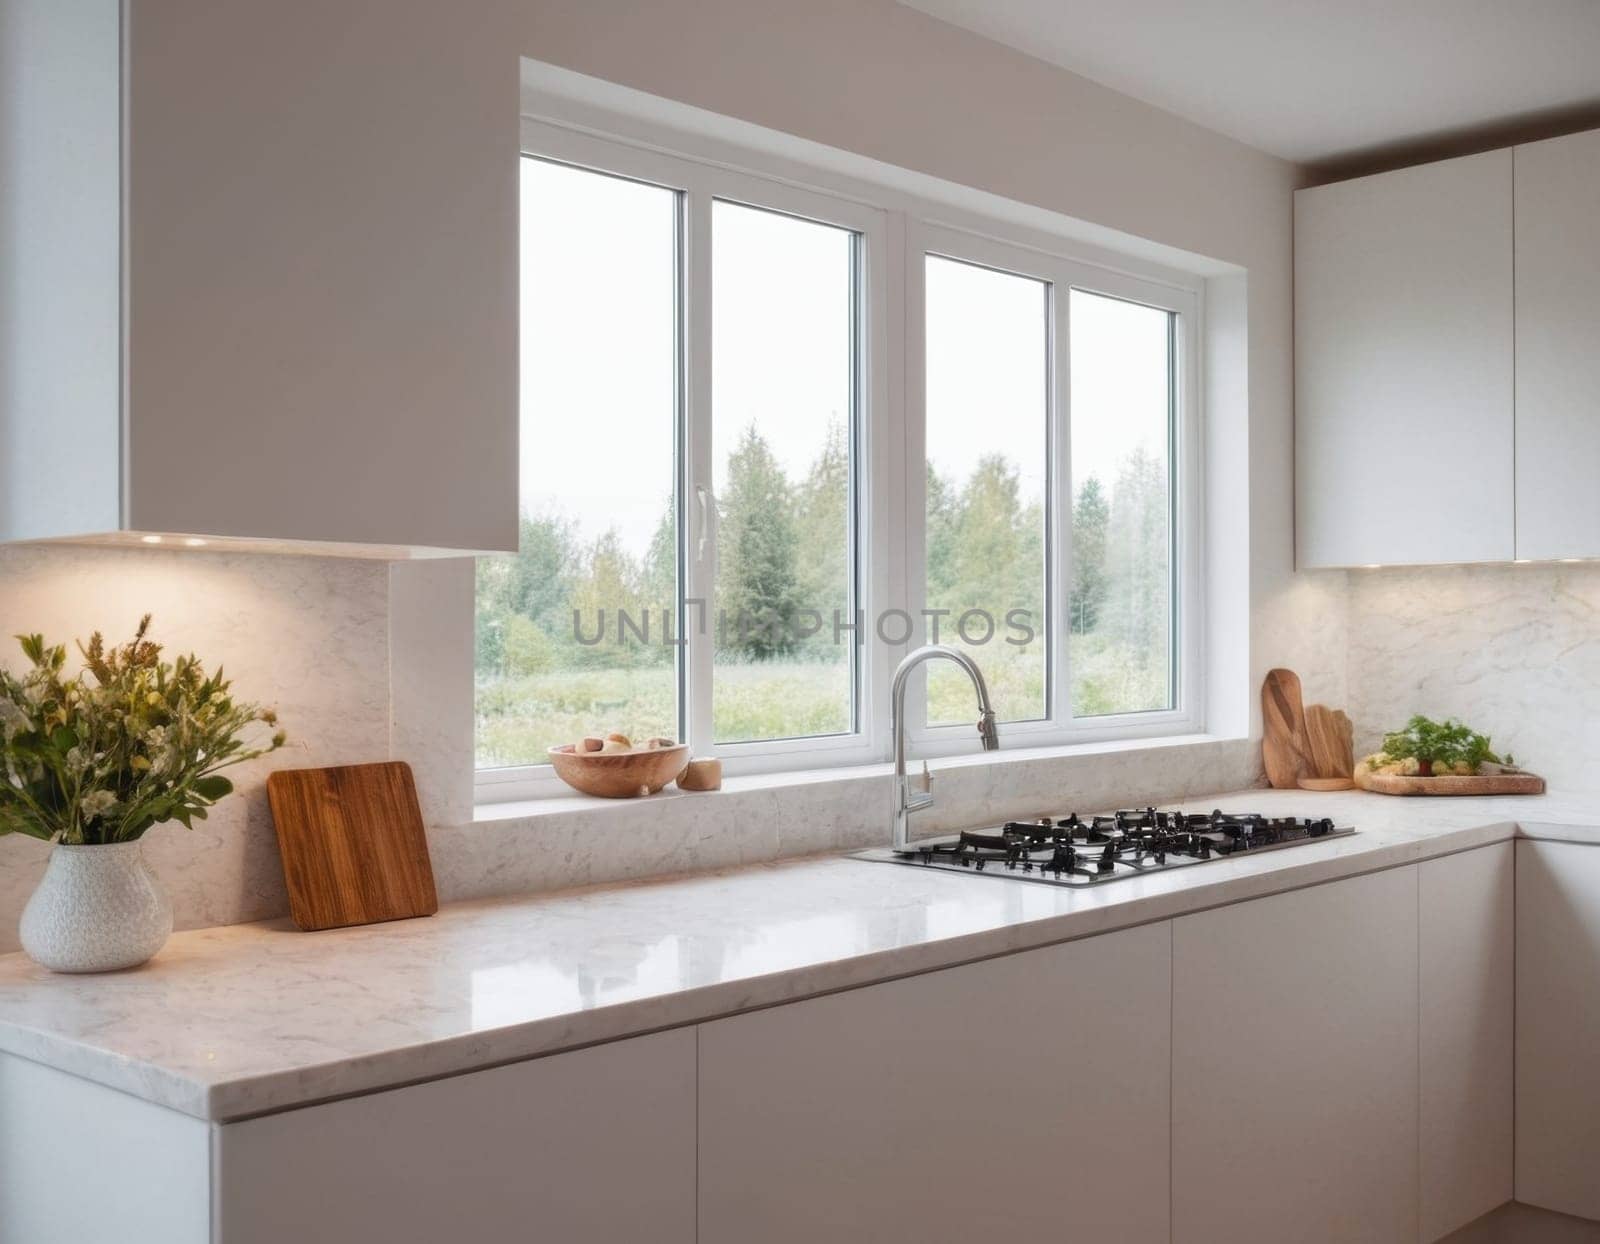 Modern kitchen interior in a minimalist eco-style. AI generation